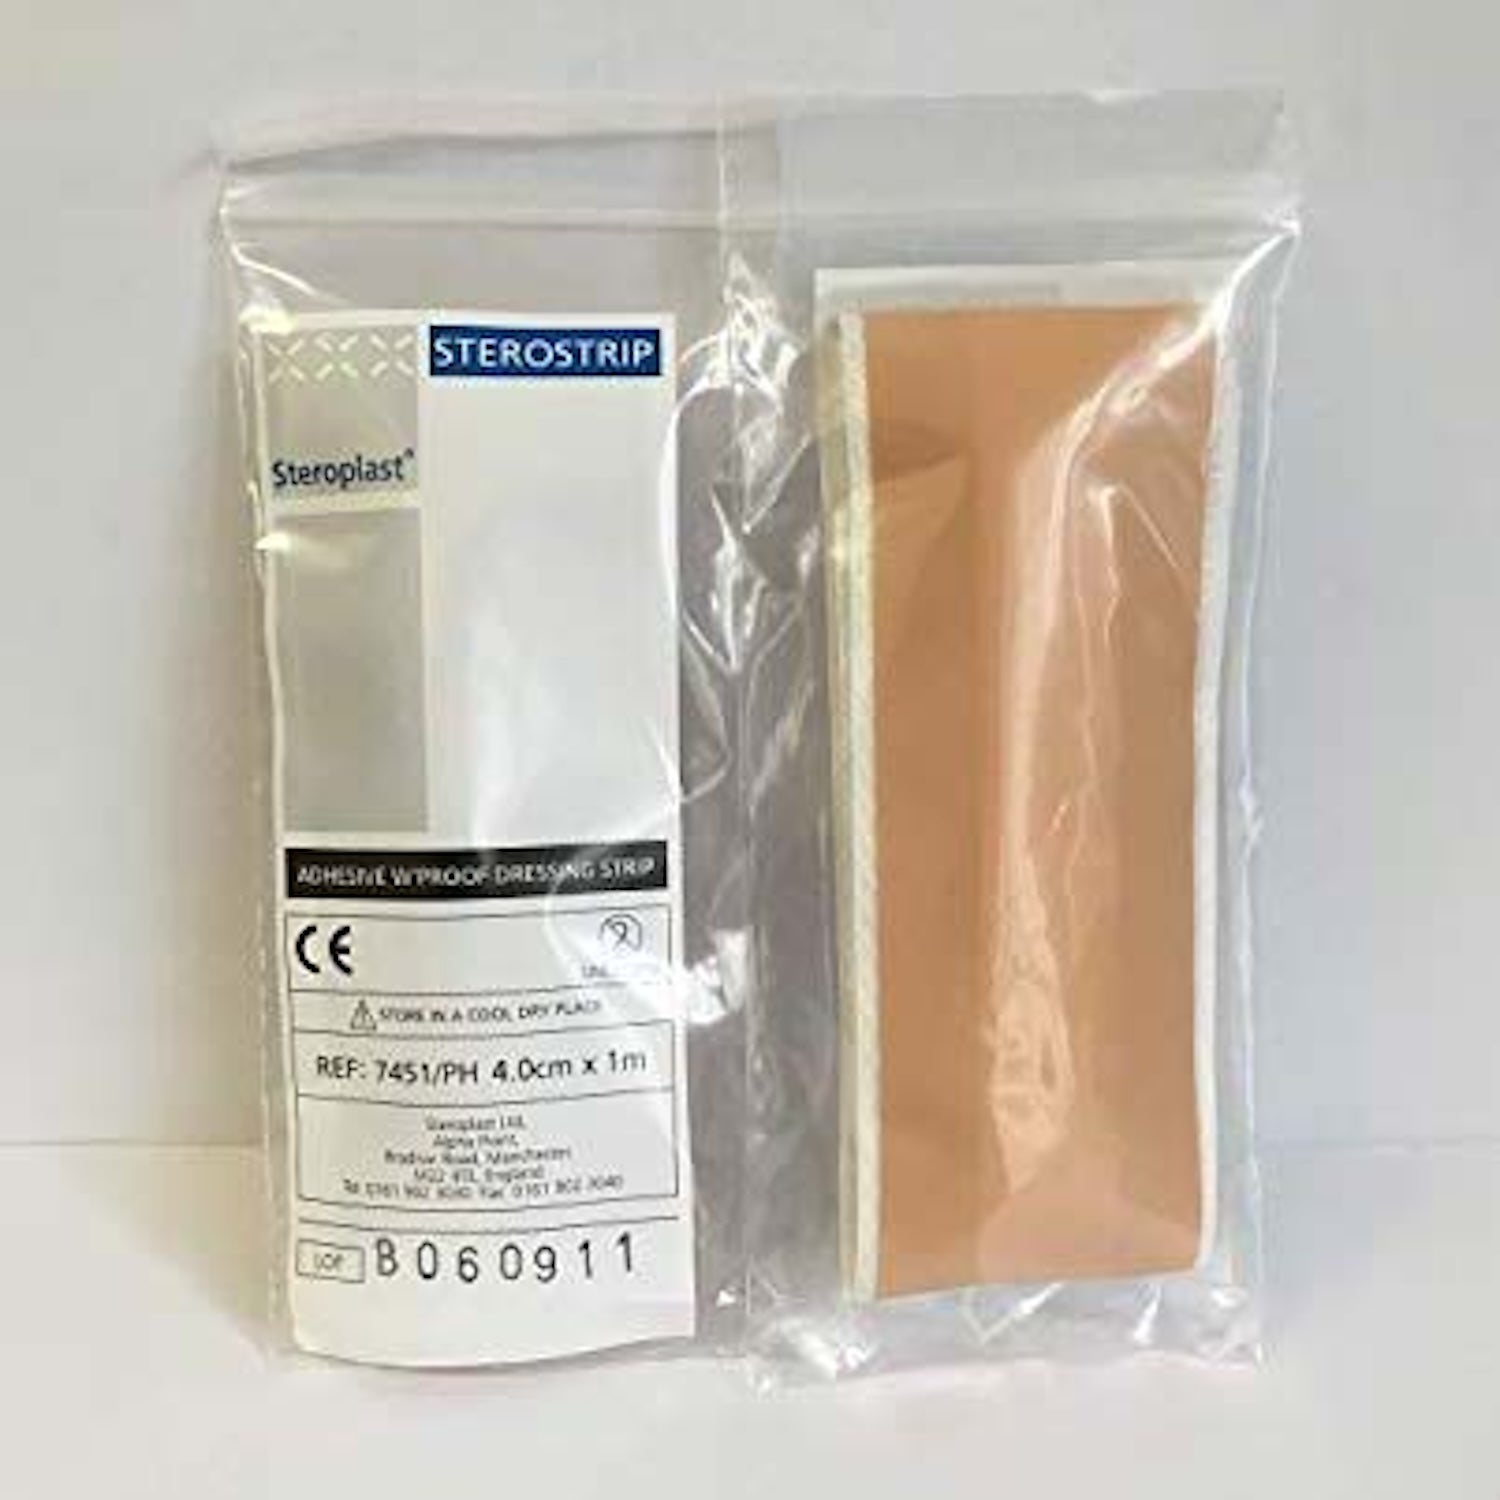 Sterostrip Adhesive Washproof Dressing Strip | 4cm x 1m